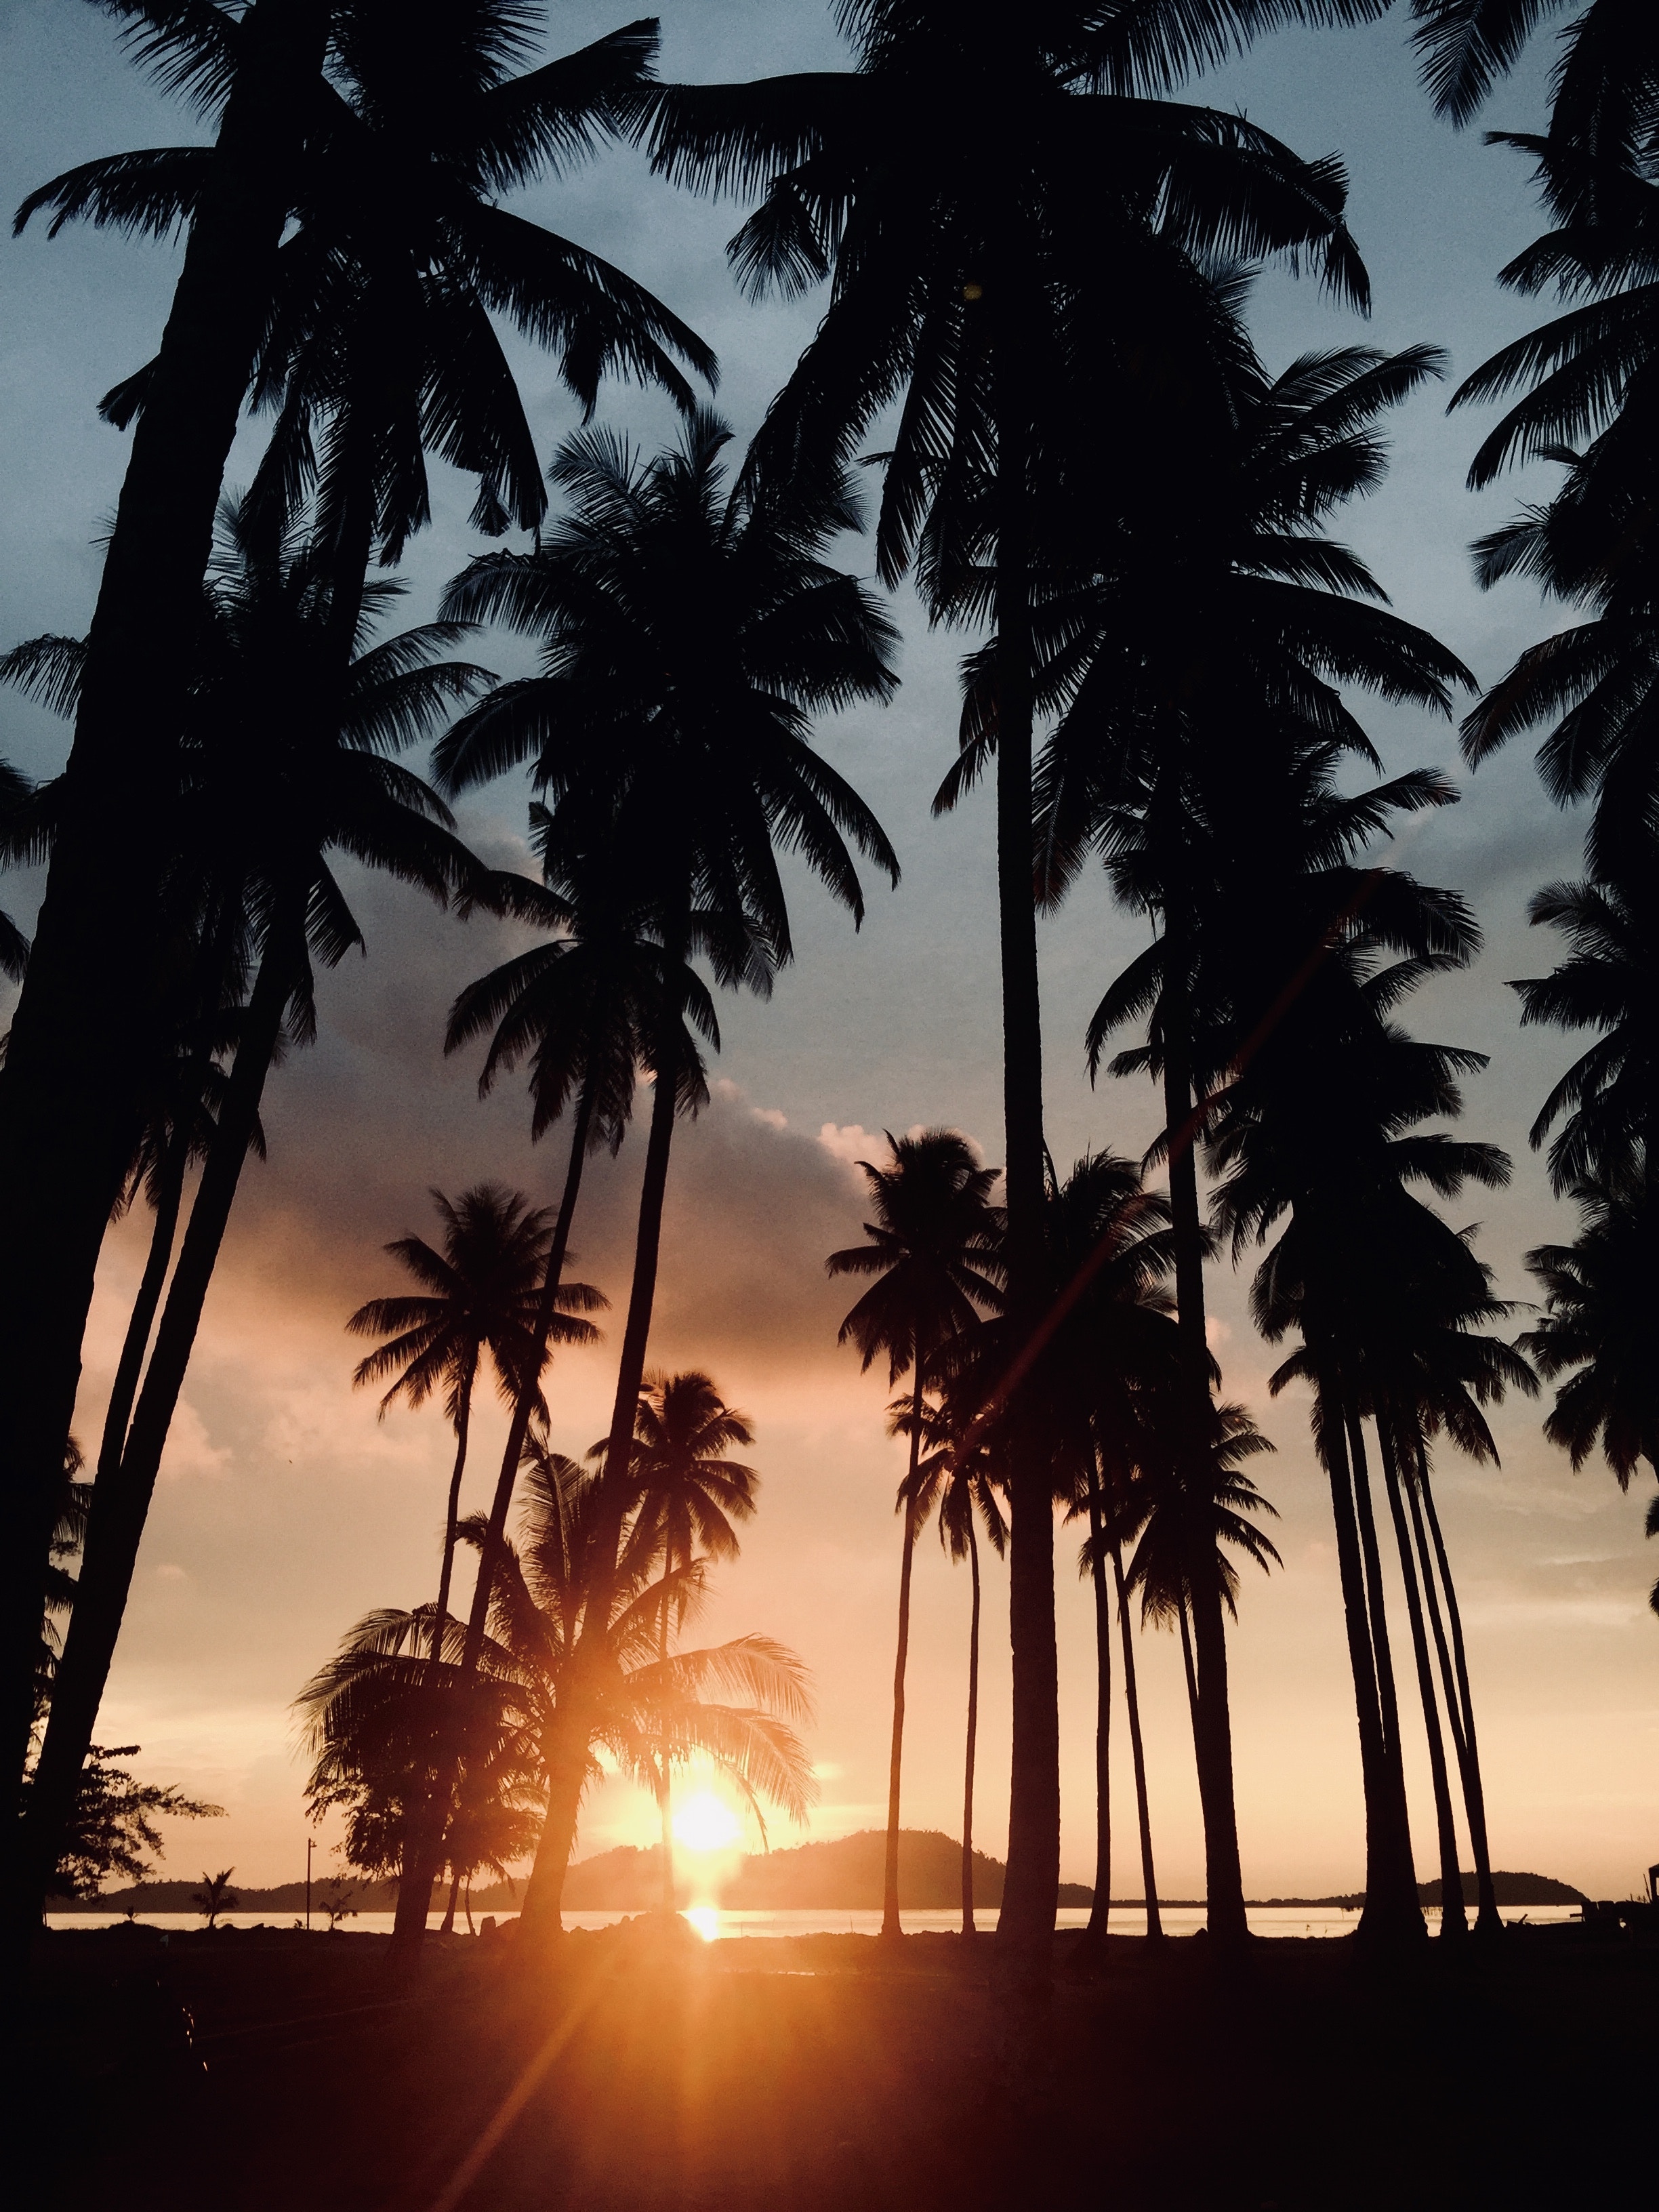 desktop Images nature, trees, sunset, palms, tropics, sunlight